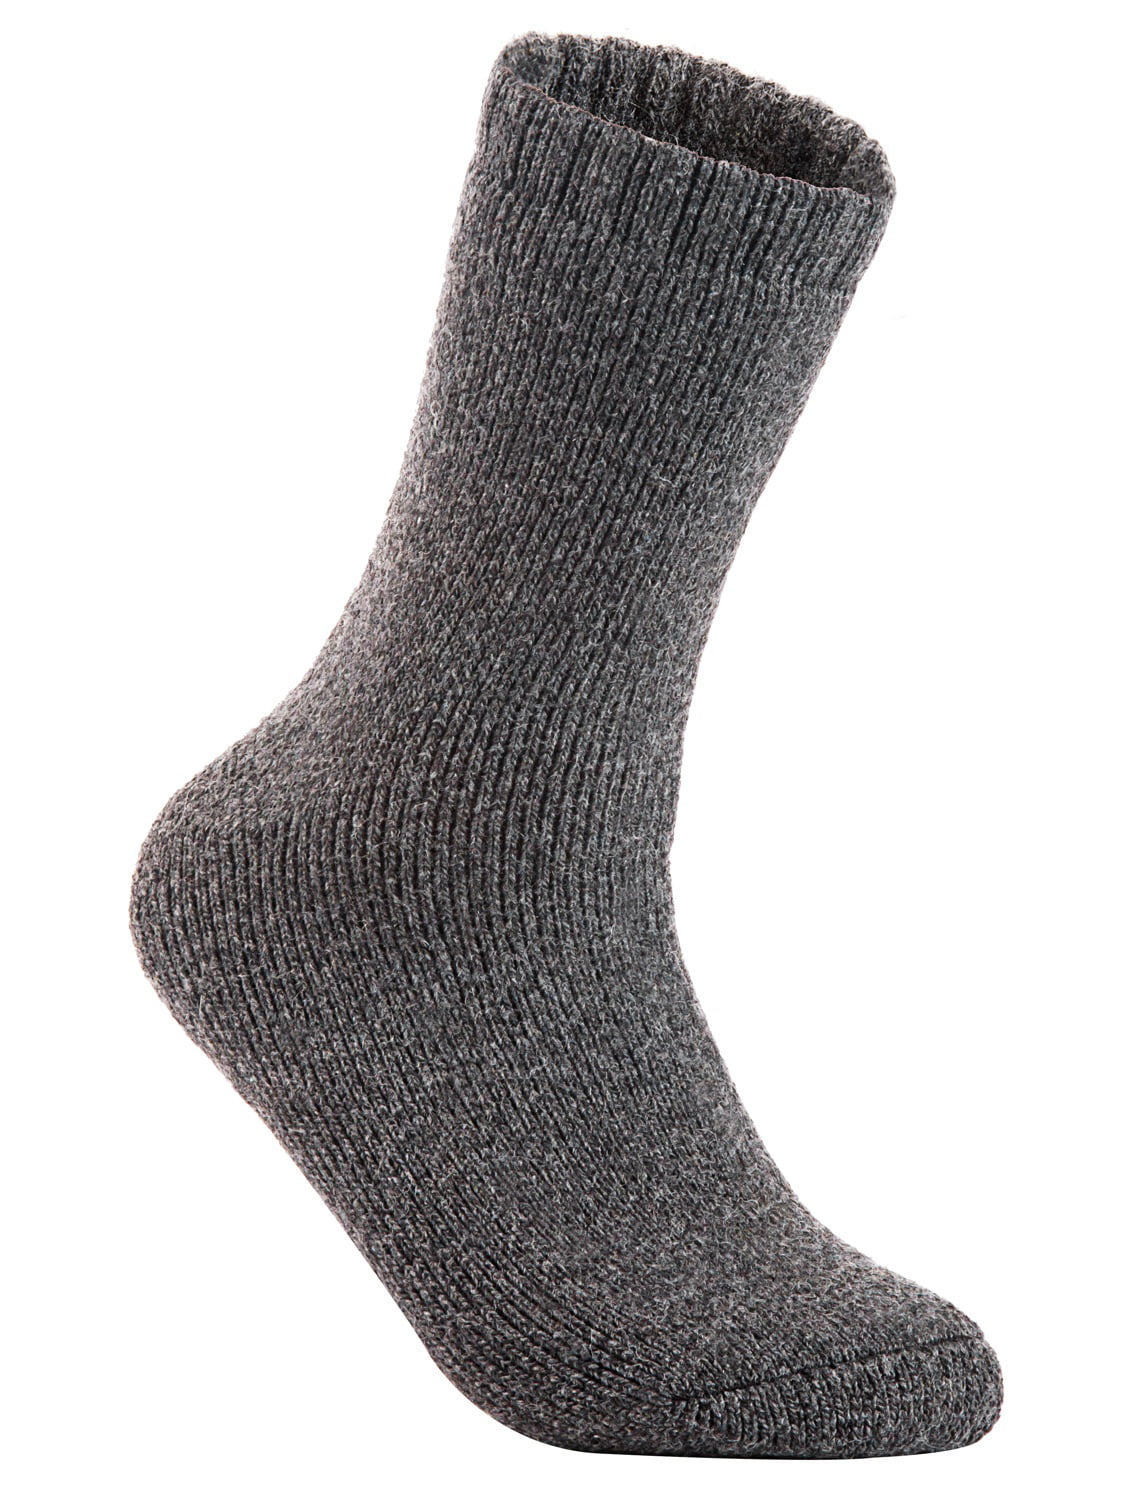 6 Pairs Men's Lamb's Wool Merino Blend Soft Warm Hiking Work Socks Size 6-11 